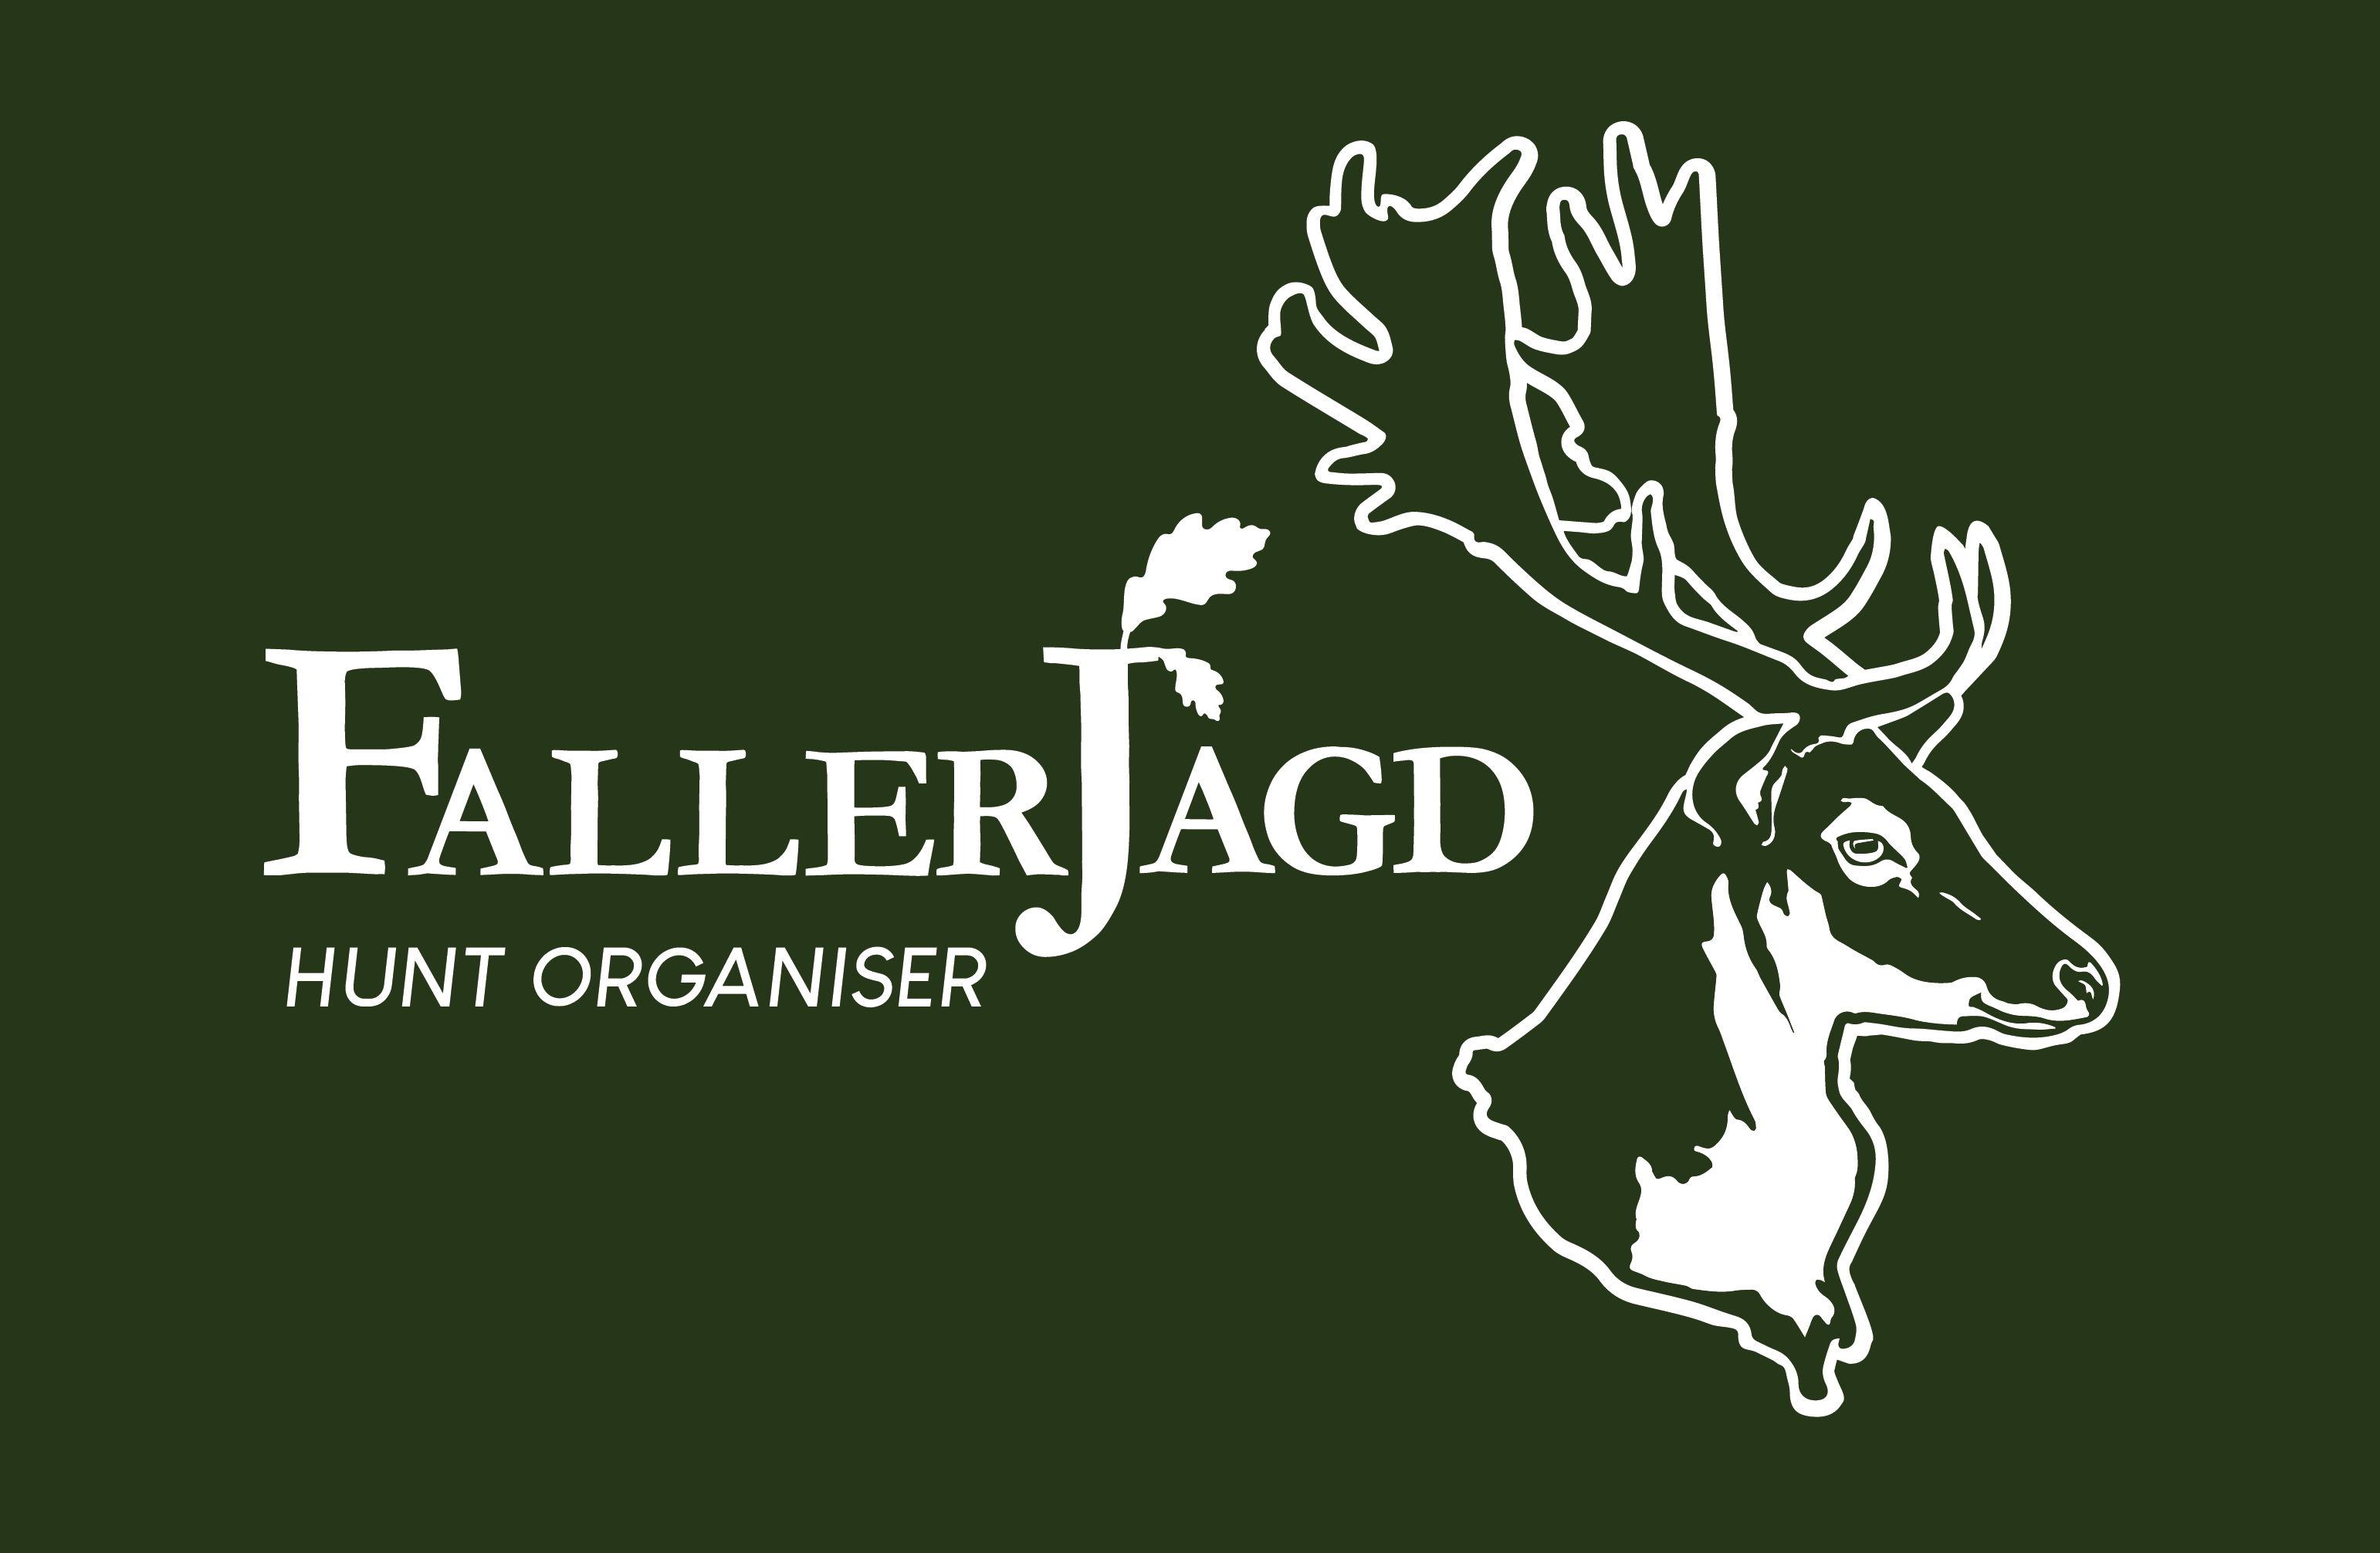 Faller Jagd Hungary - Hunting organization